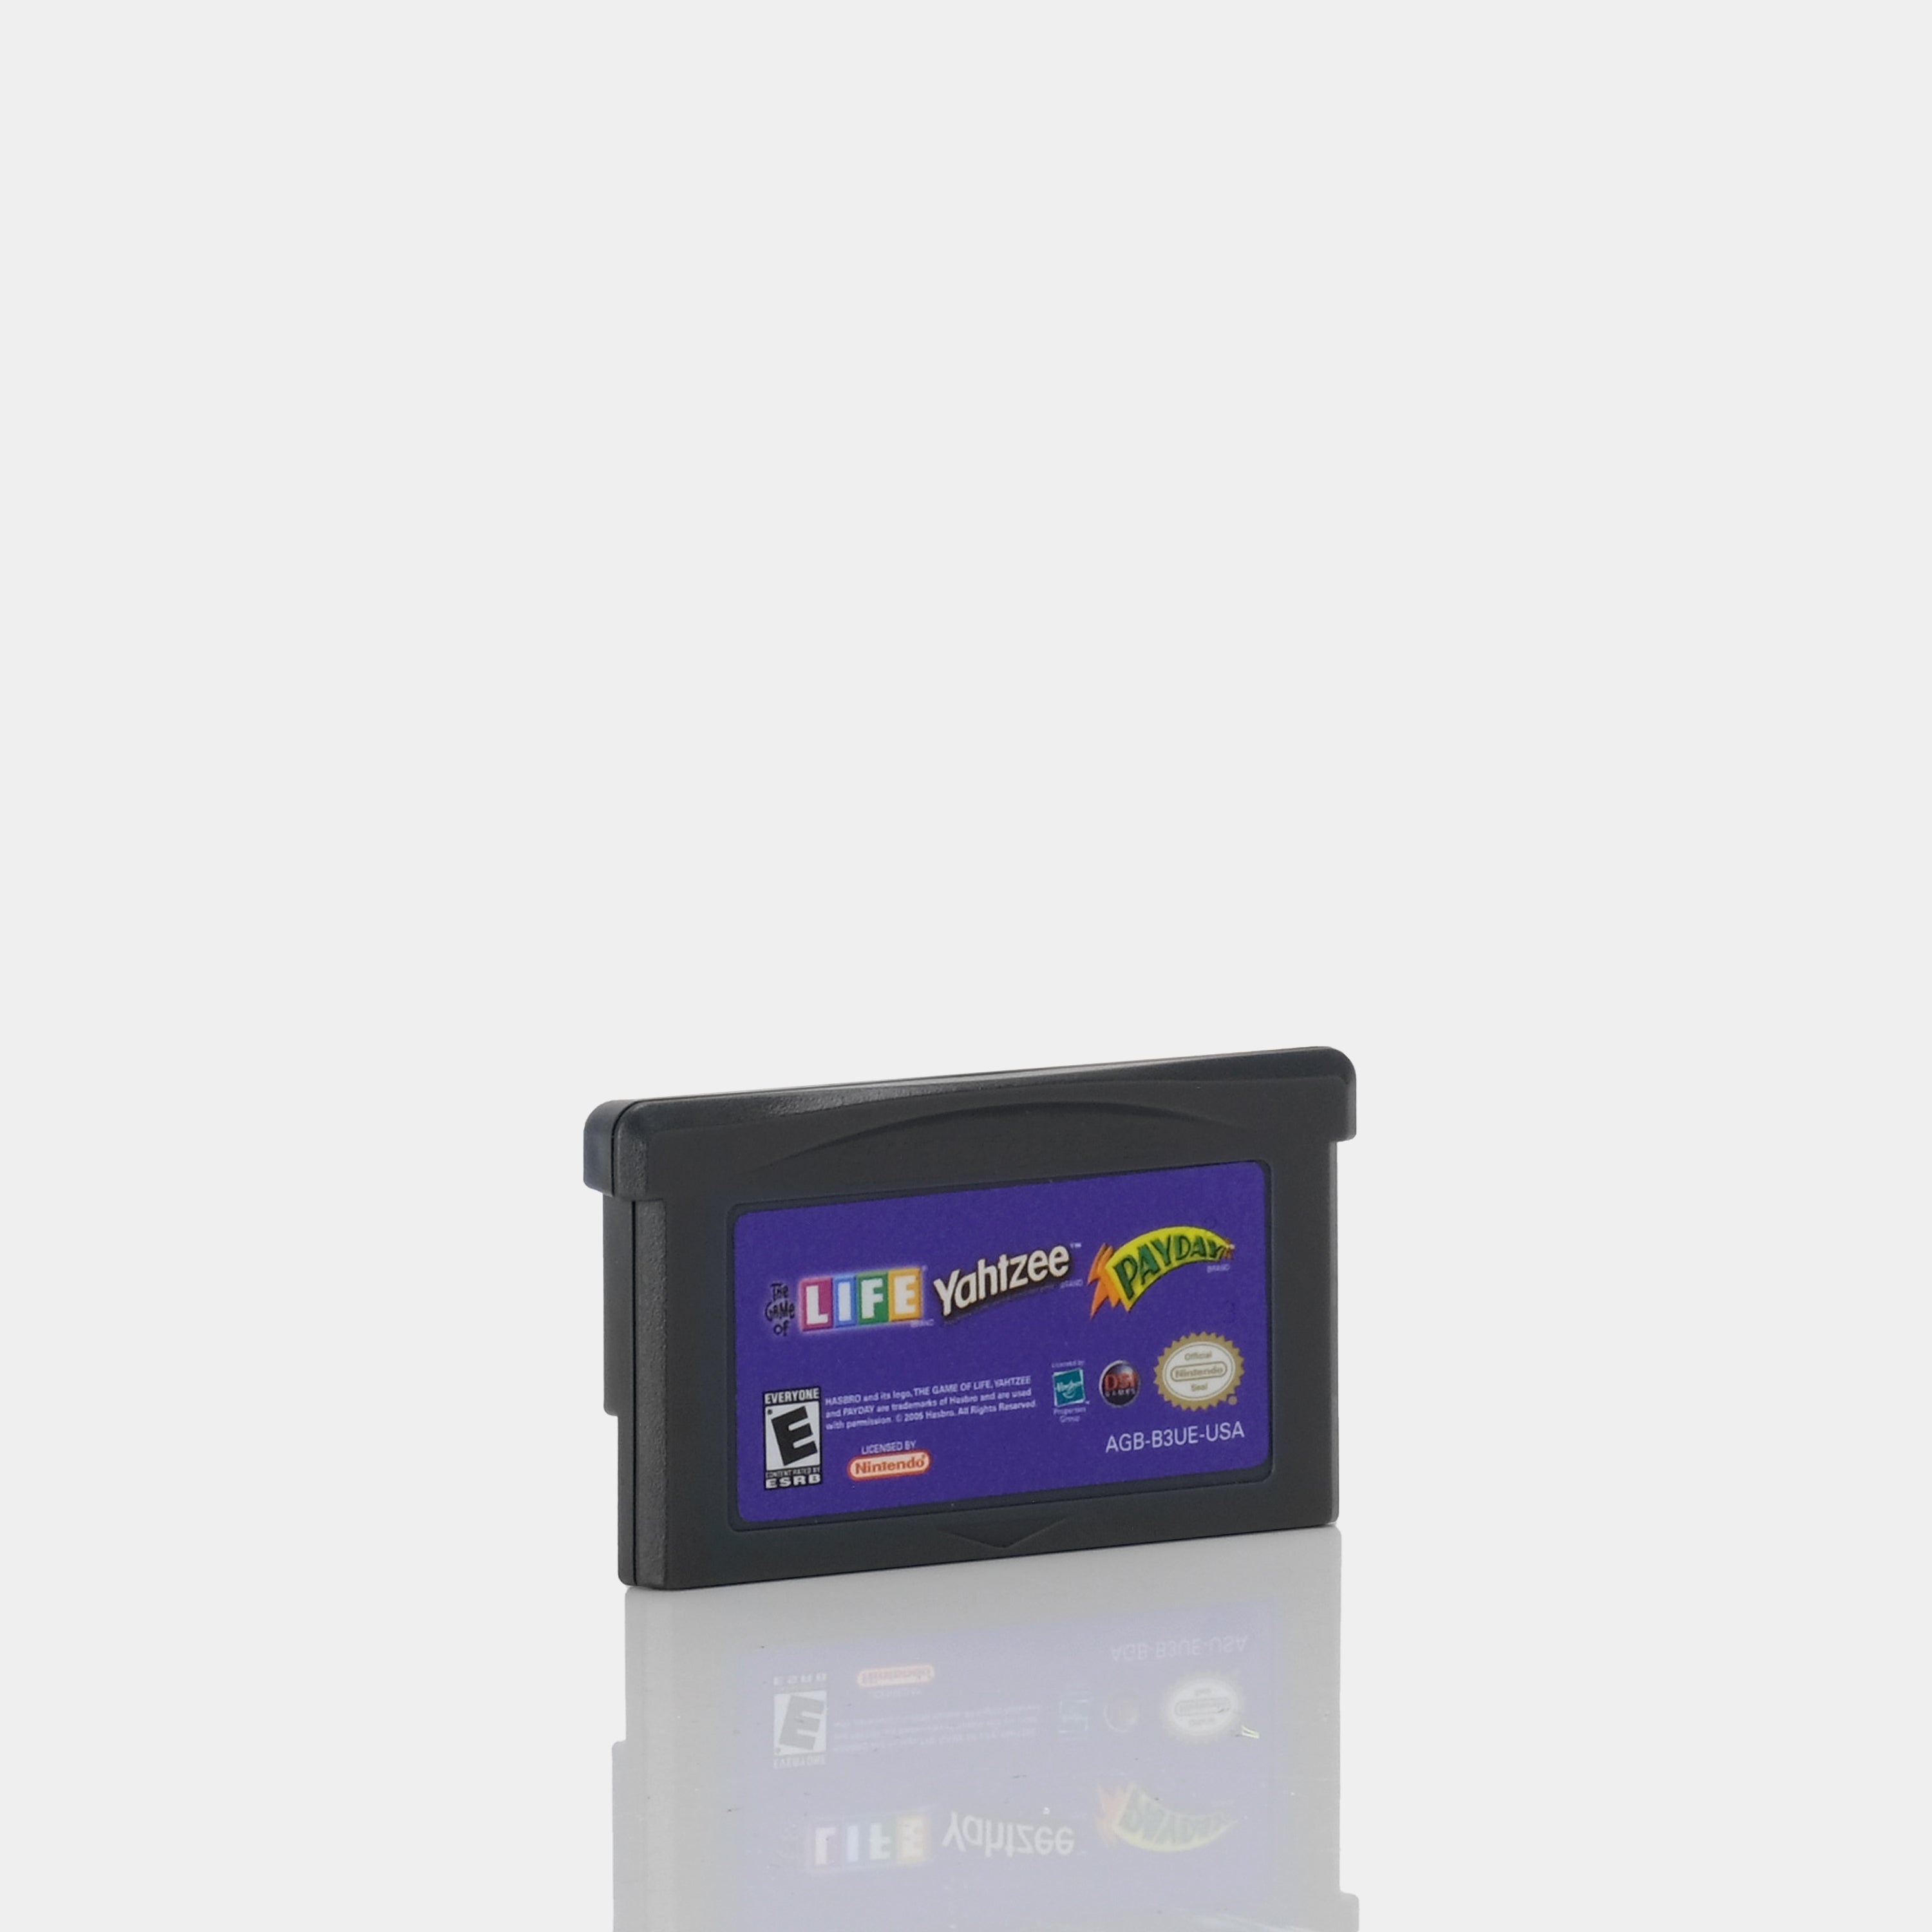 Life / Yahtzee / Payday Game Boy Advance Game